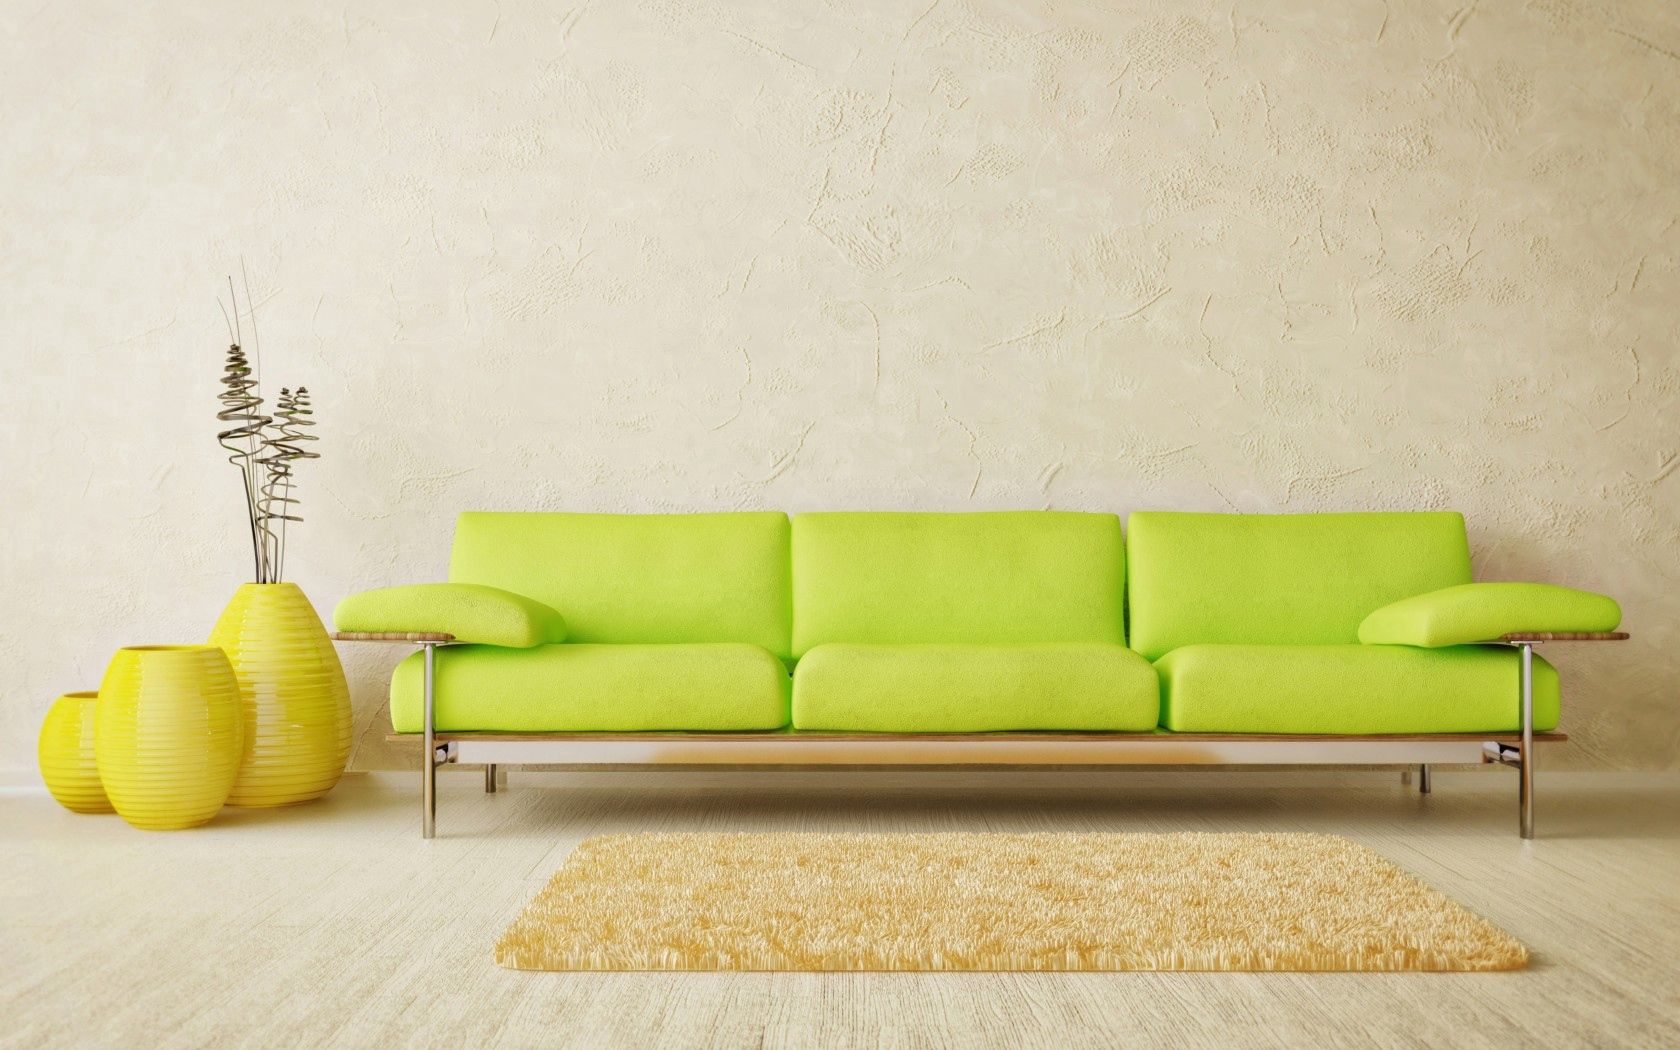 rug, light, minimalism, interior, yellow, green, miscellanea, miscellaneous, light coloured, design, room, style, sofa, mat, vases, parquet